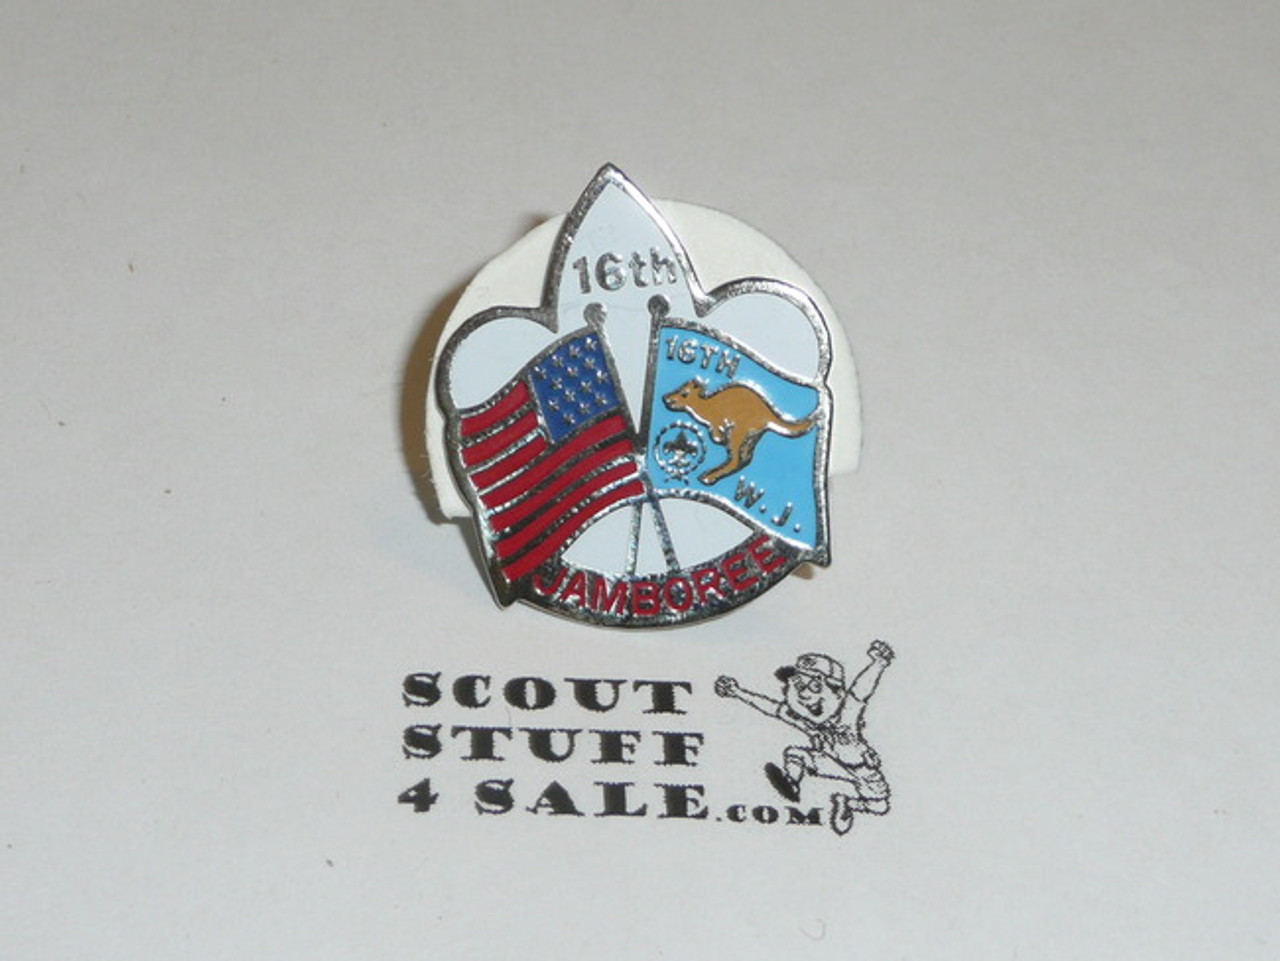 1987/1988 World Jamboree USA Contingent Pin